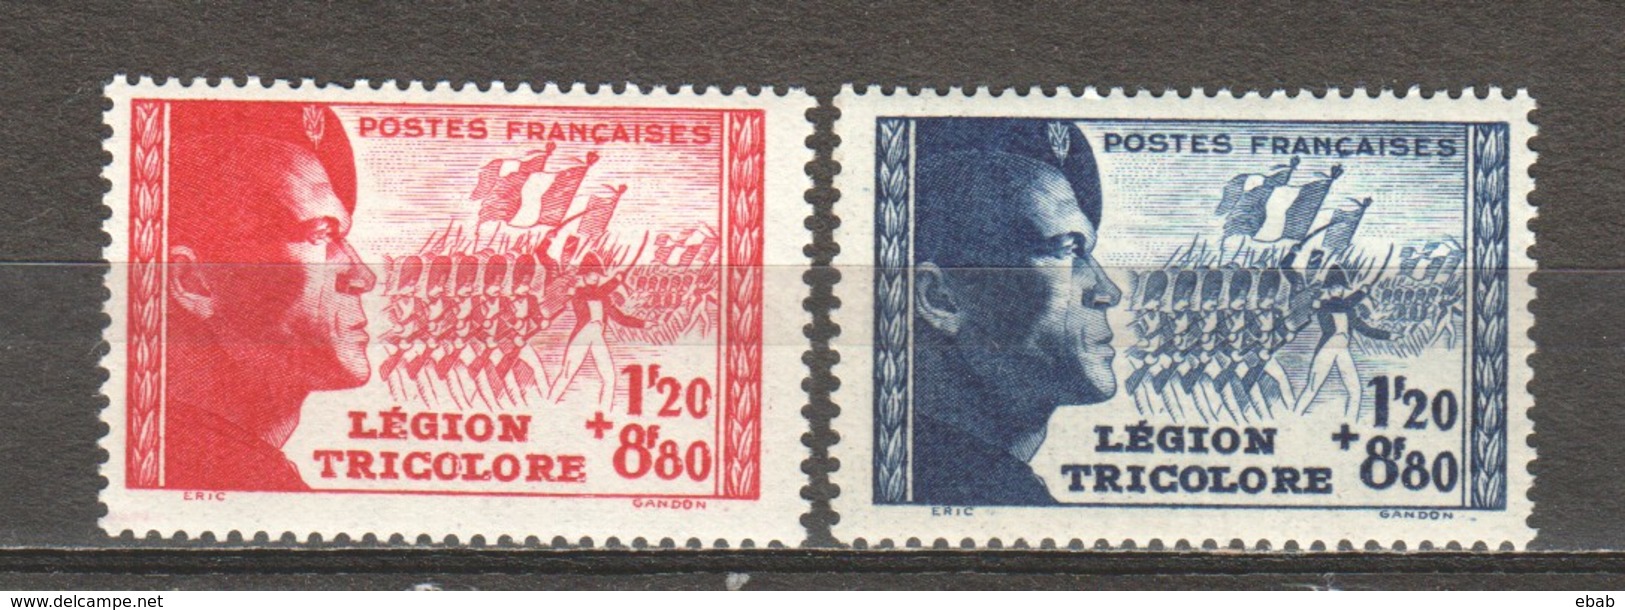 France 1942 Mi 576-577 MNH LEGION TRICOLORE (1) - Unused Stamps